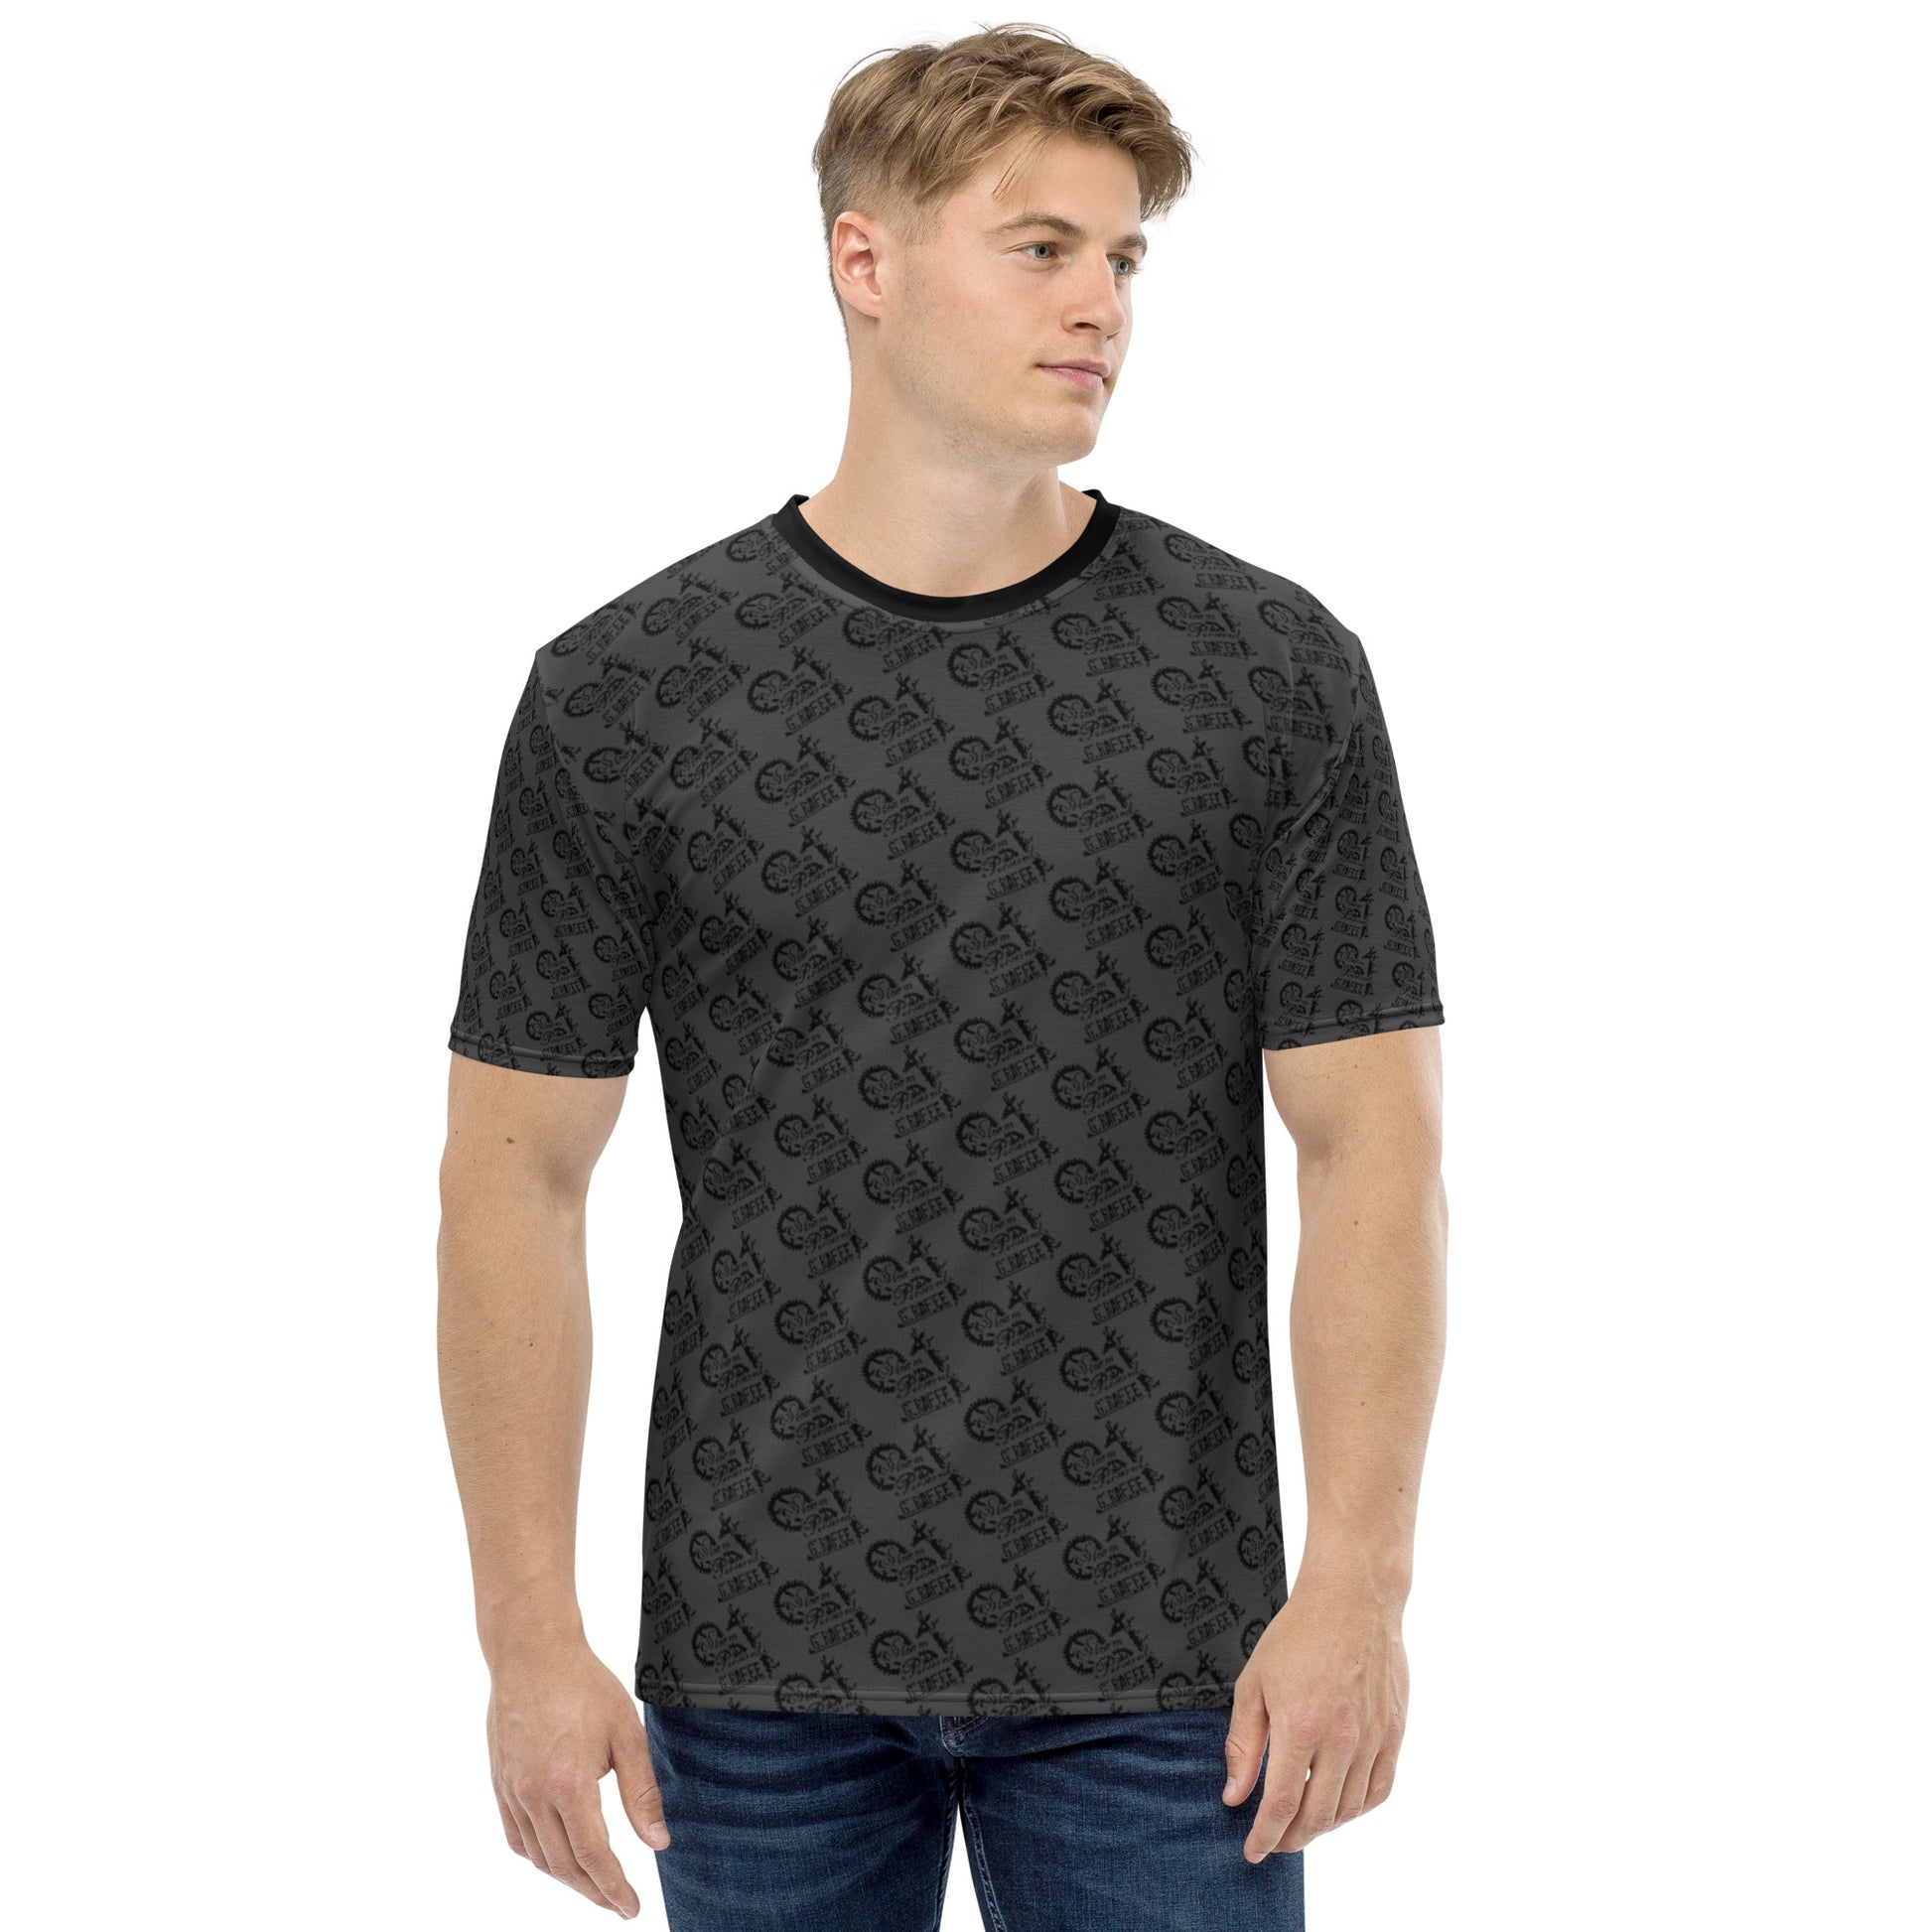 Louis Vuitton LV Fade Printed Long-sleeved T-Shirt Black